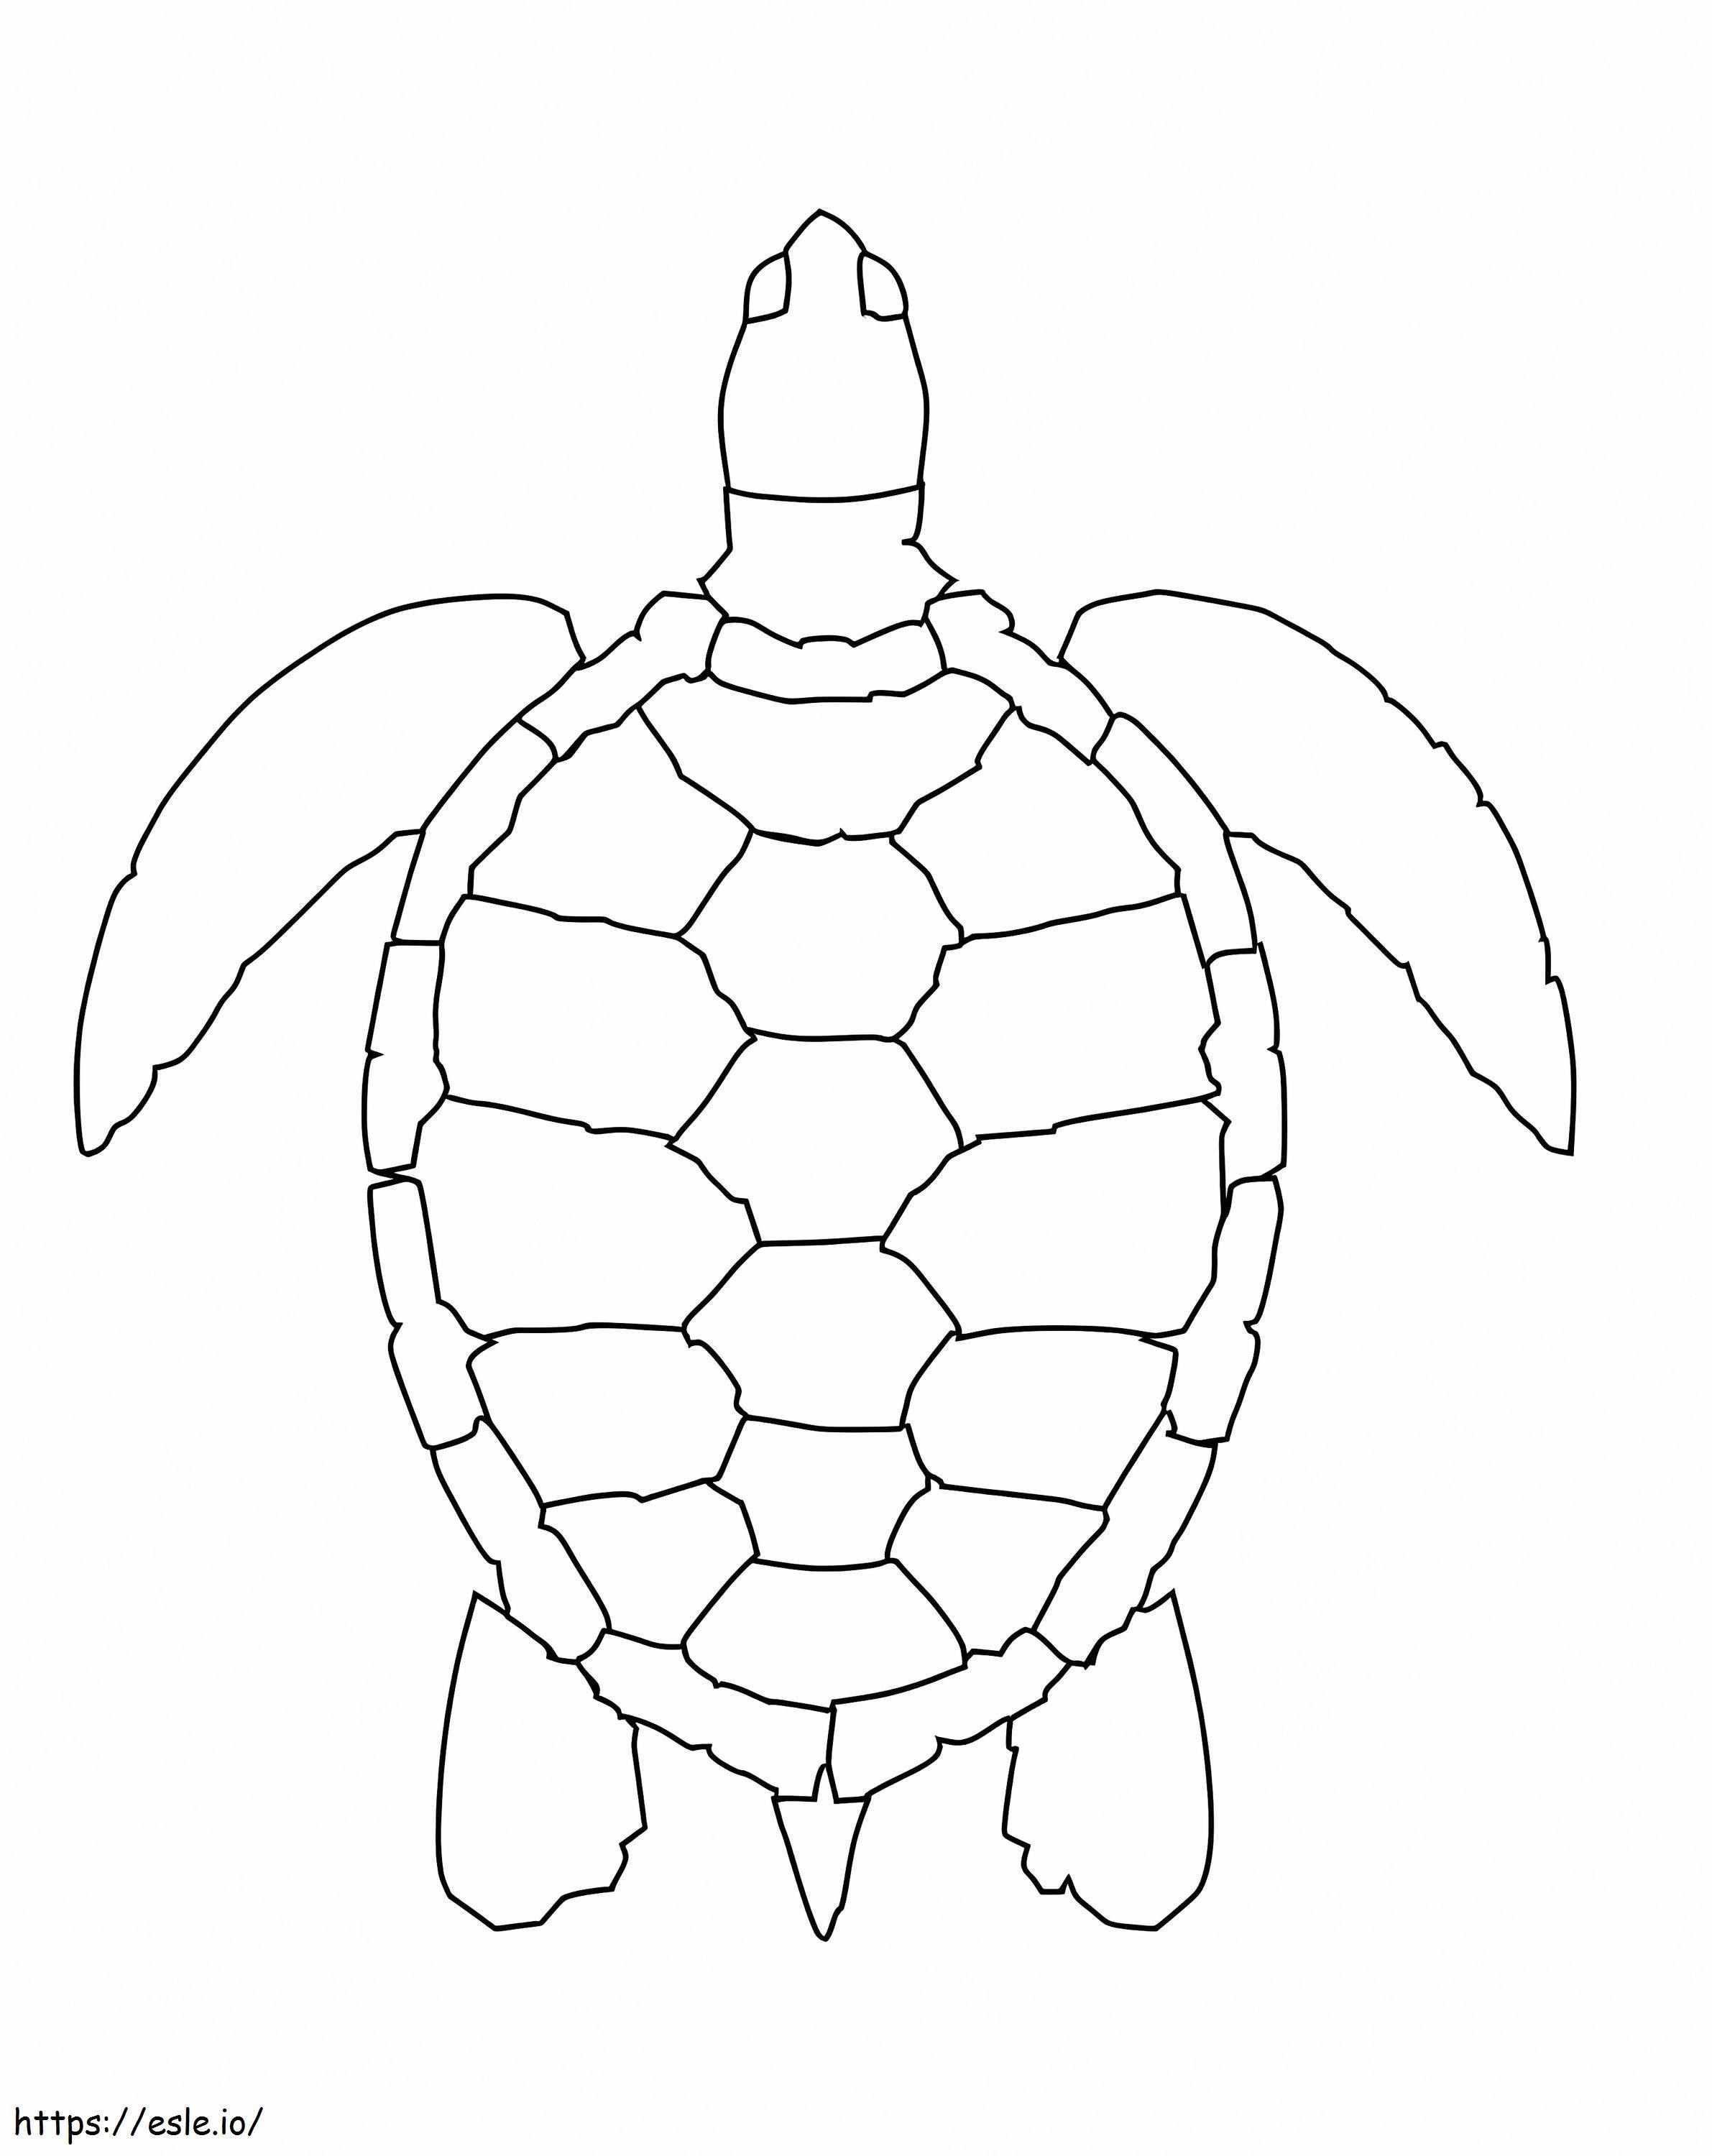 Tartaruga Marinha Simples para colorir